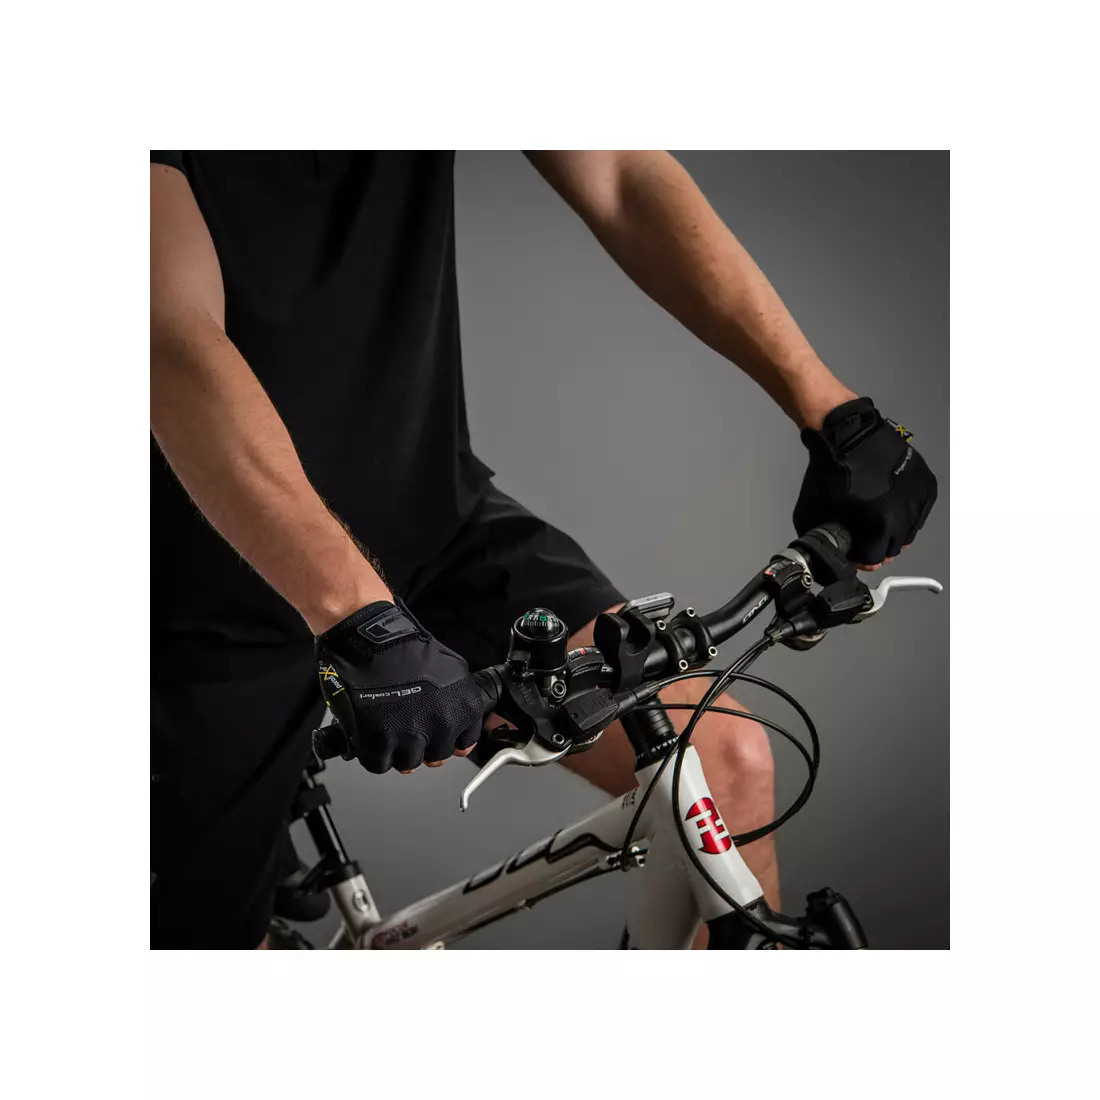 CHIBA GEL COMFORT cycling gloves, black 3040518